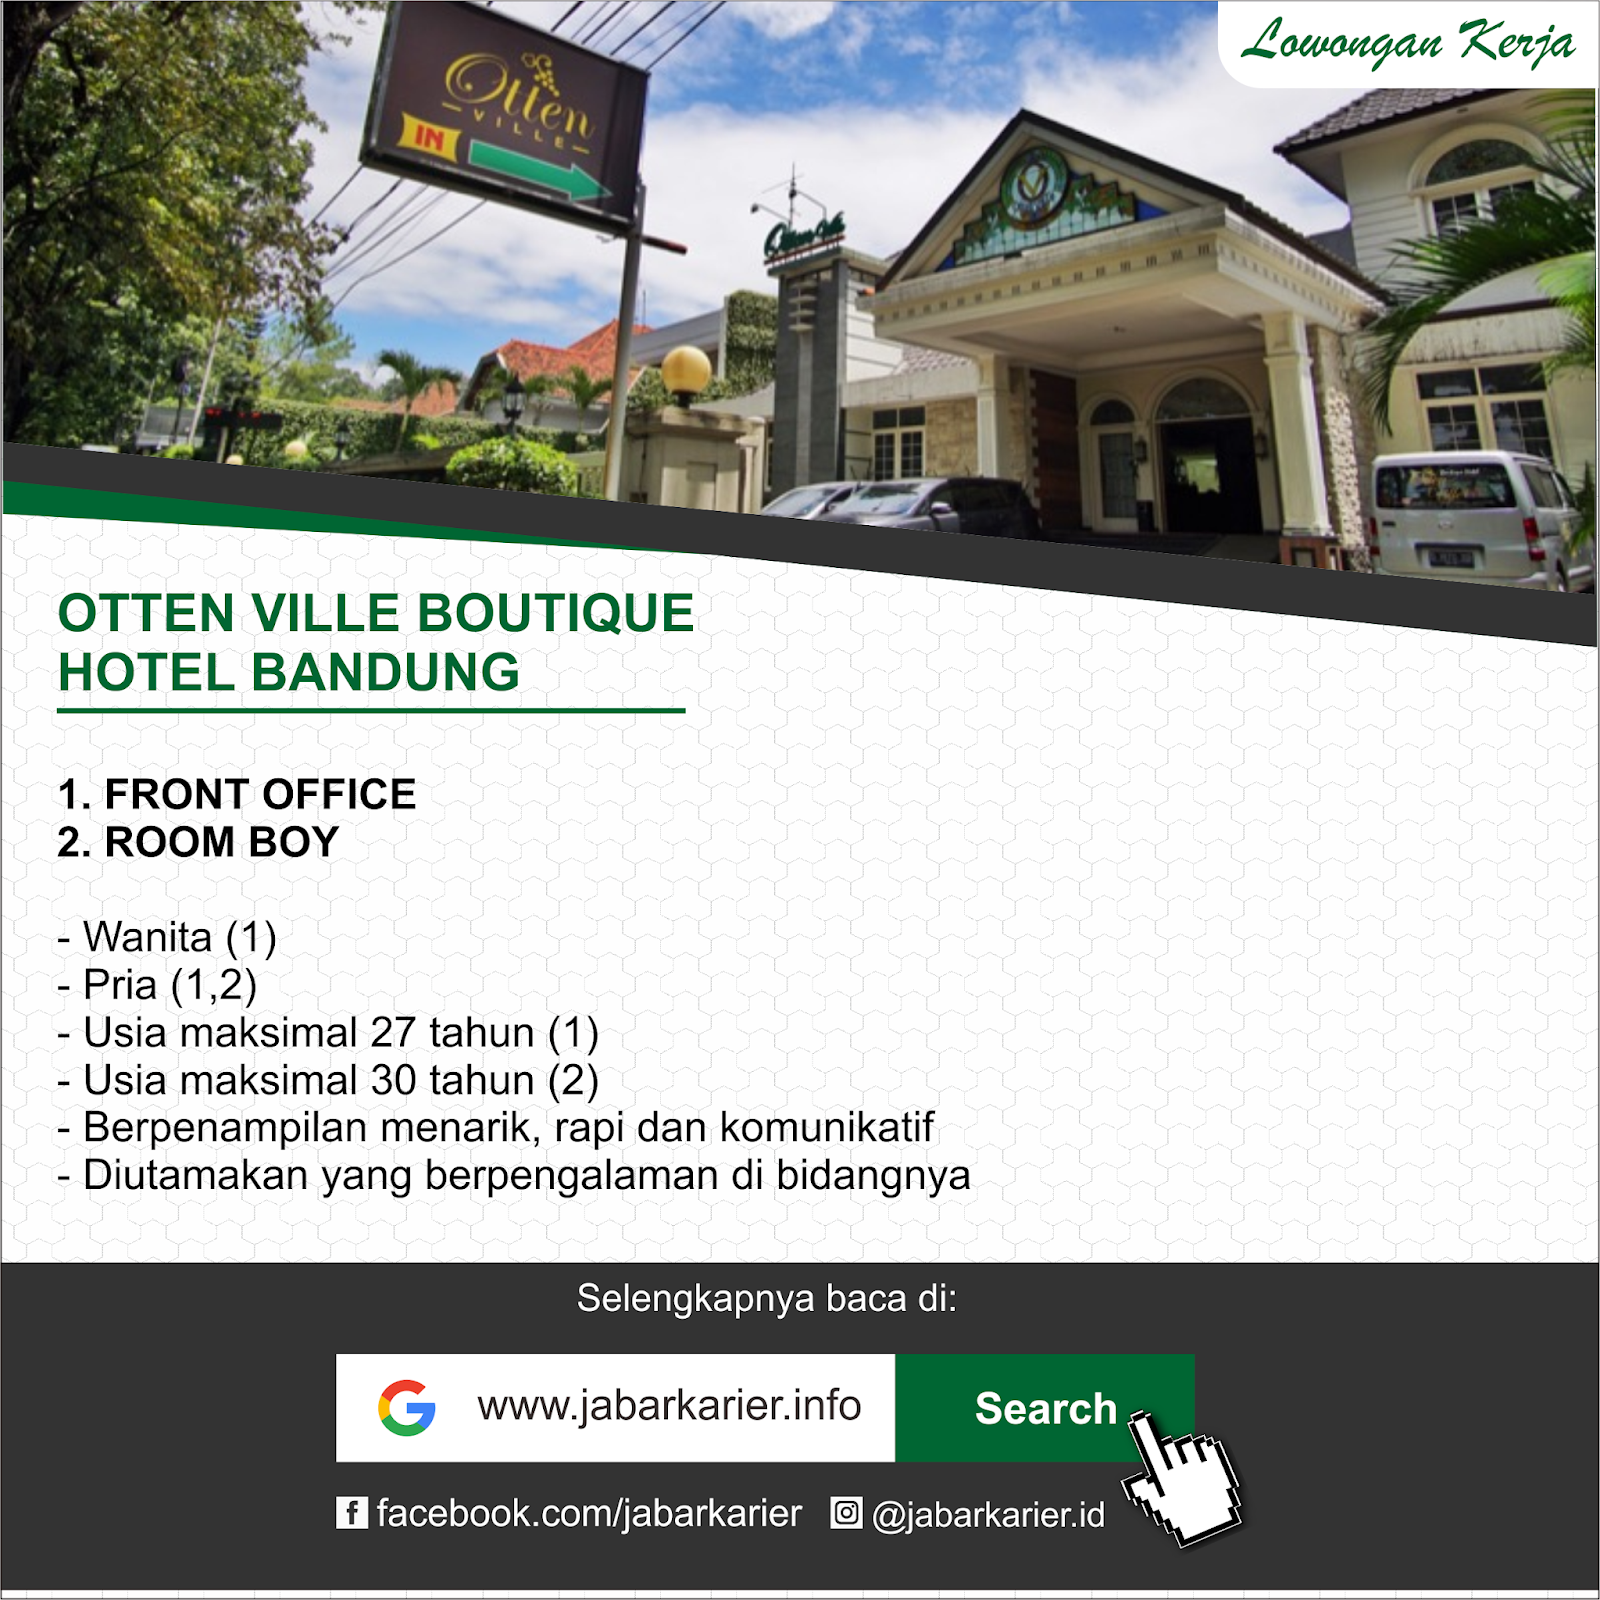 Lowongan Kerja Otten Ville Boutique Hotel Bandung ...